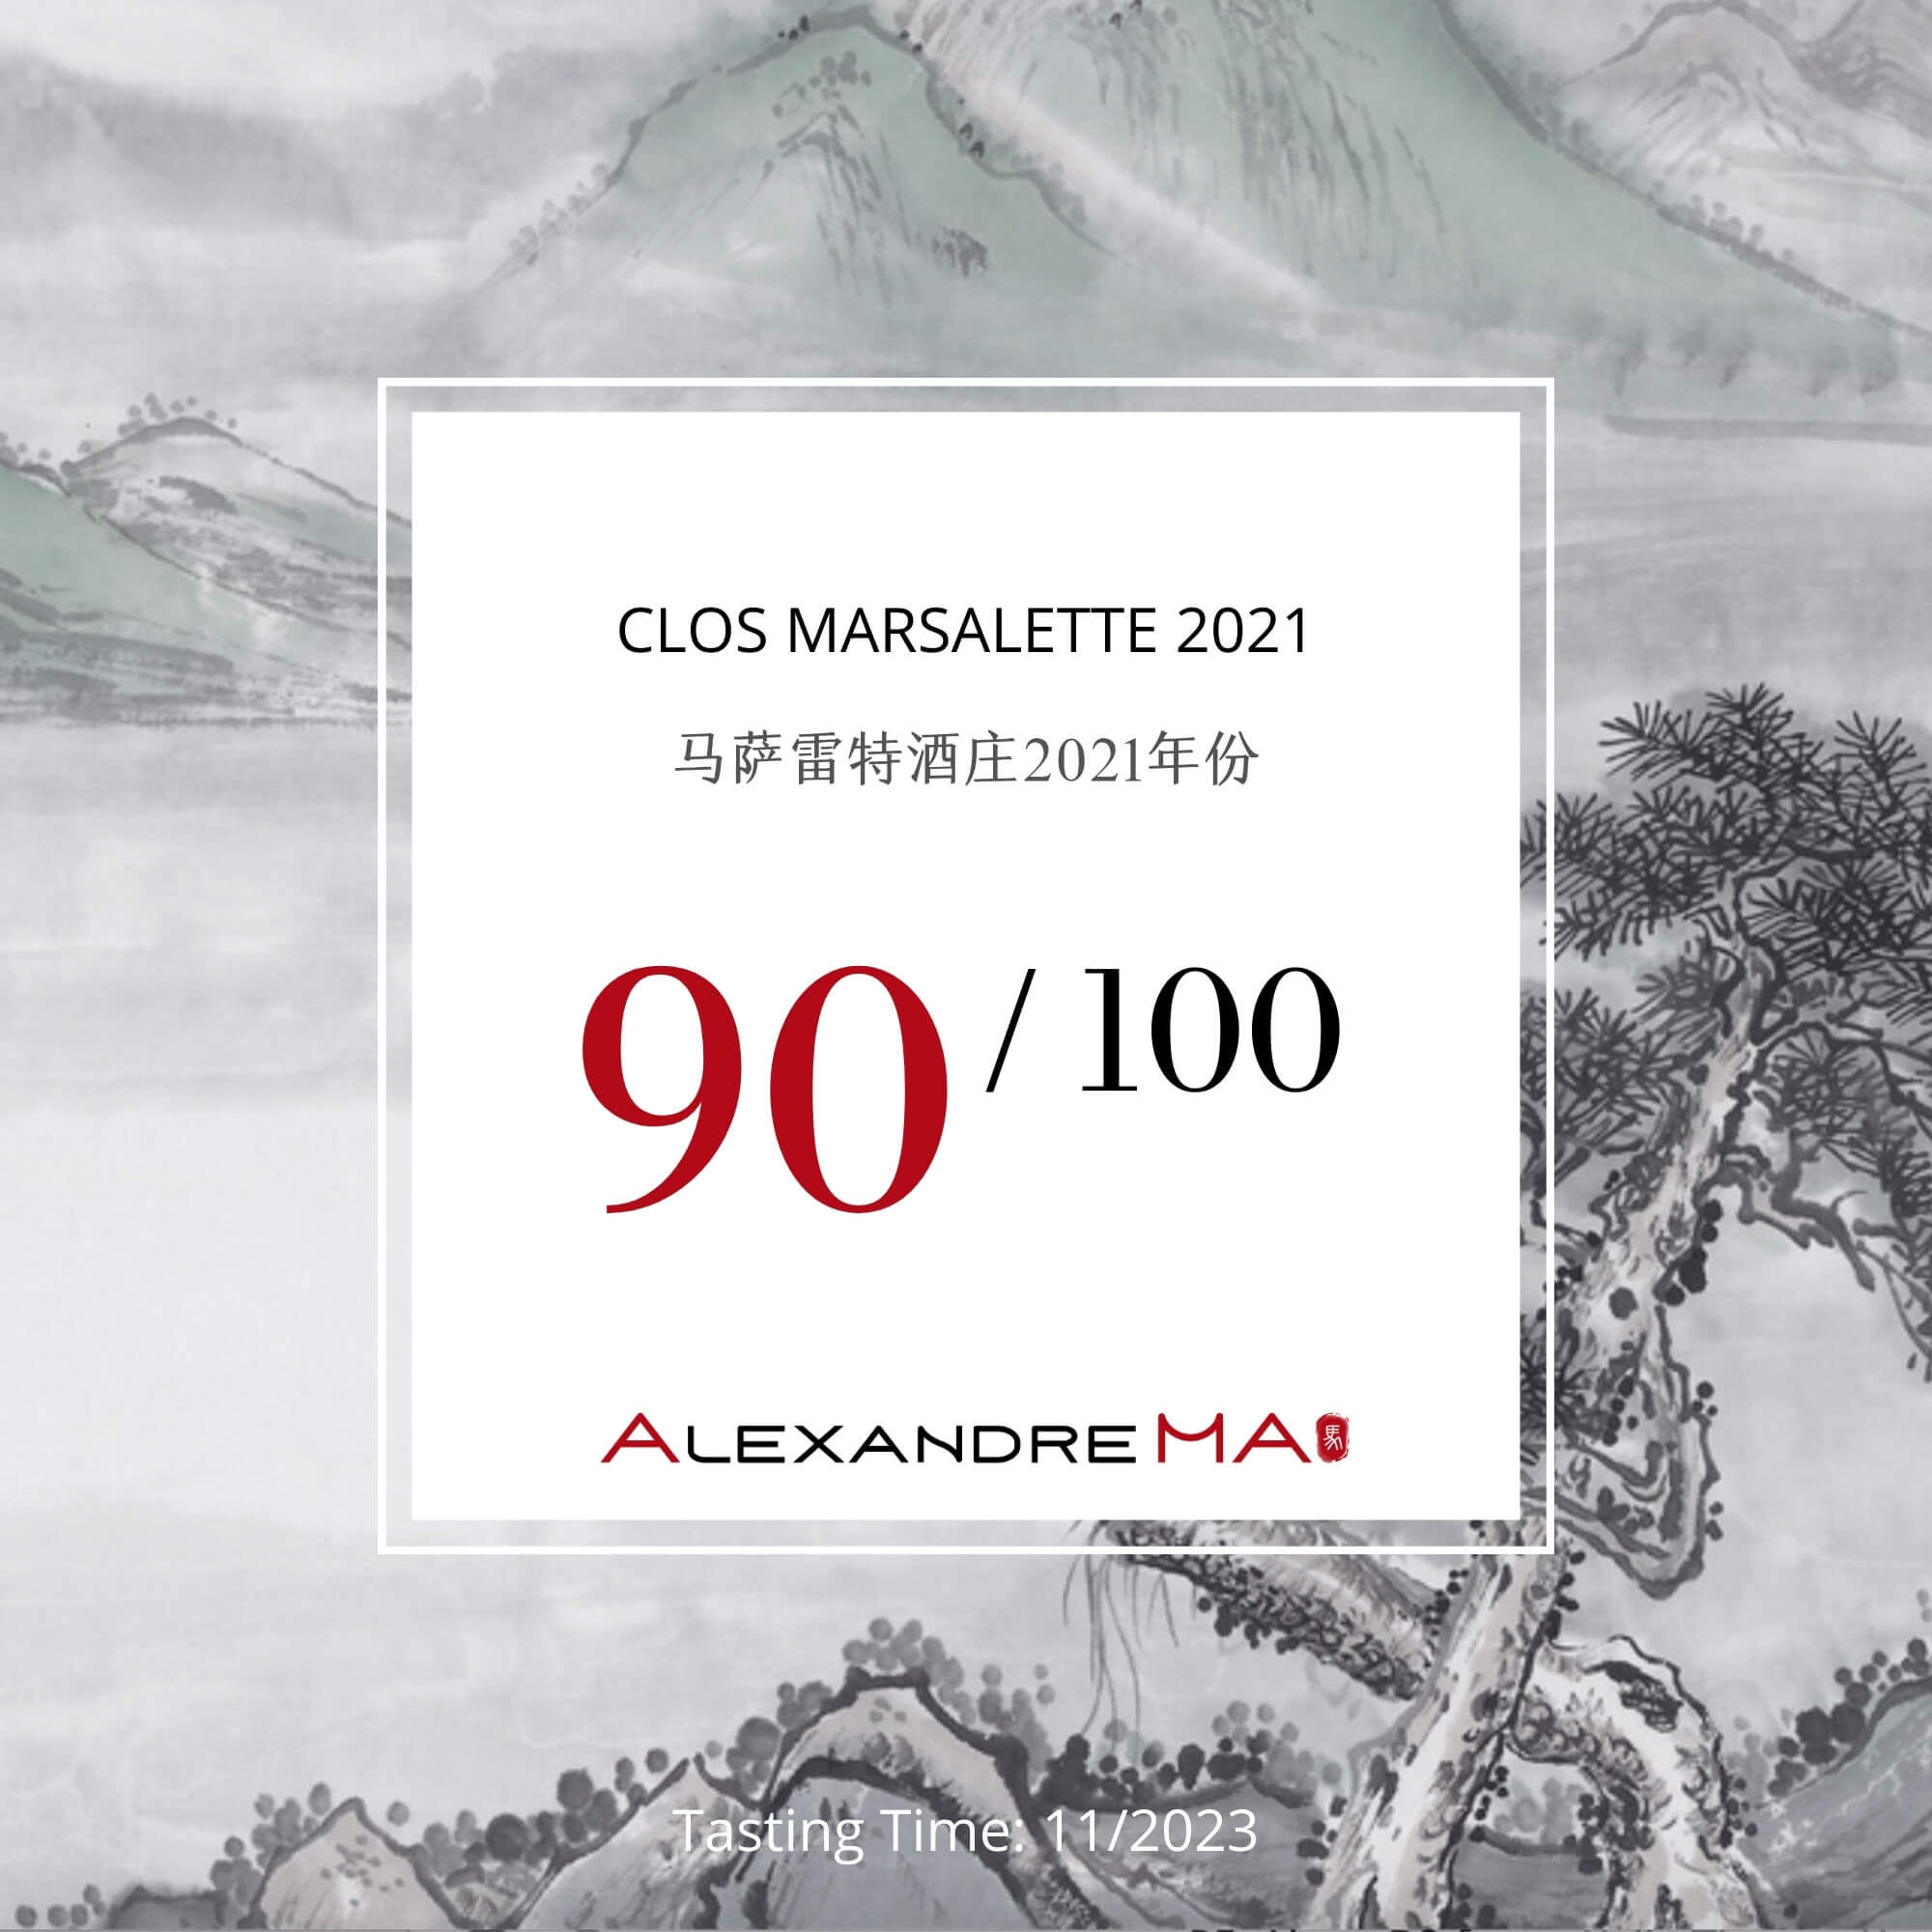 Clos Marsalette 2021 - Alexandre MA